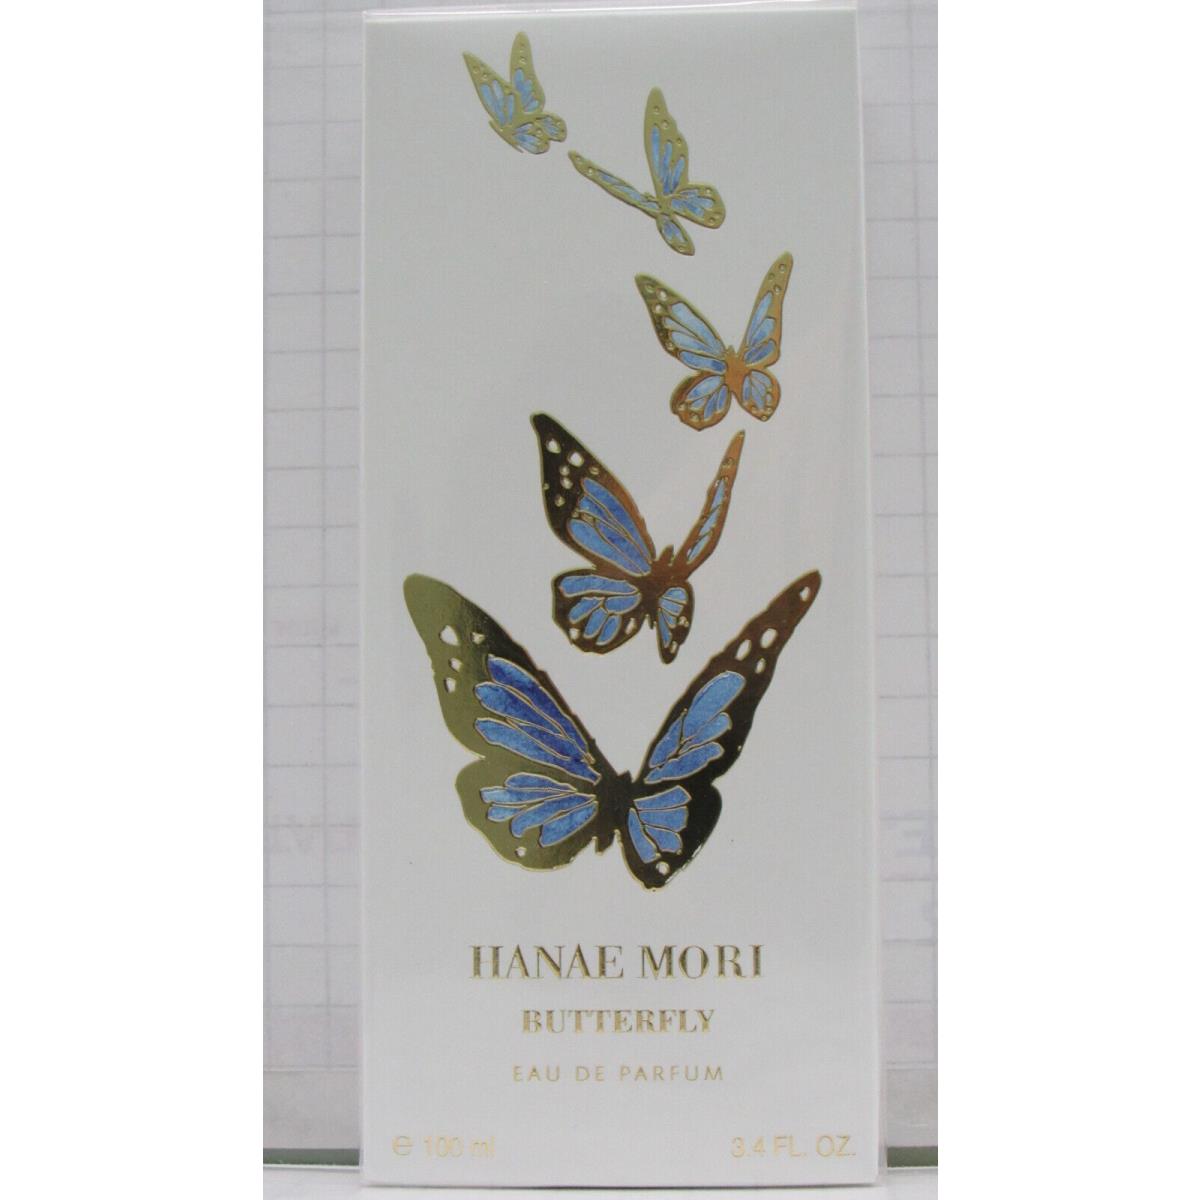 Hanae Mori Butterfly For Women 3.4OZ./100ml Eau de Parfum Spray